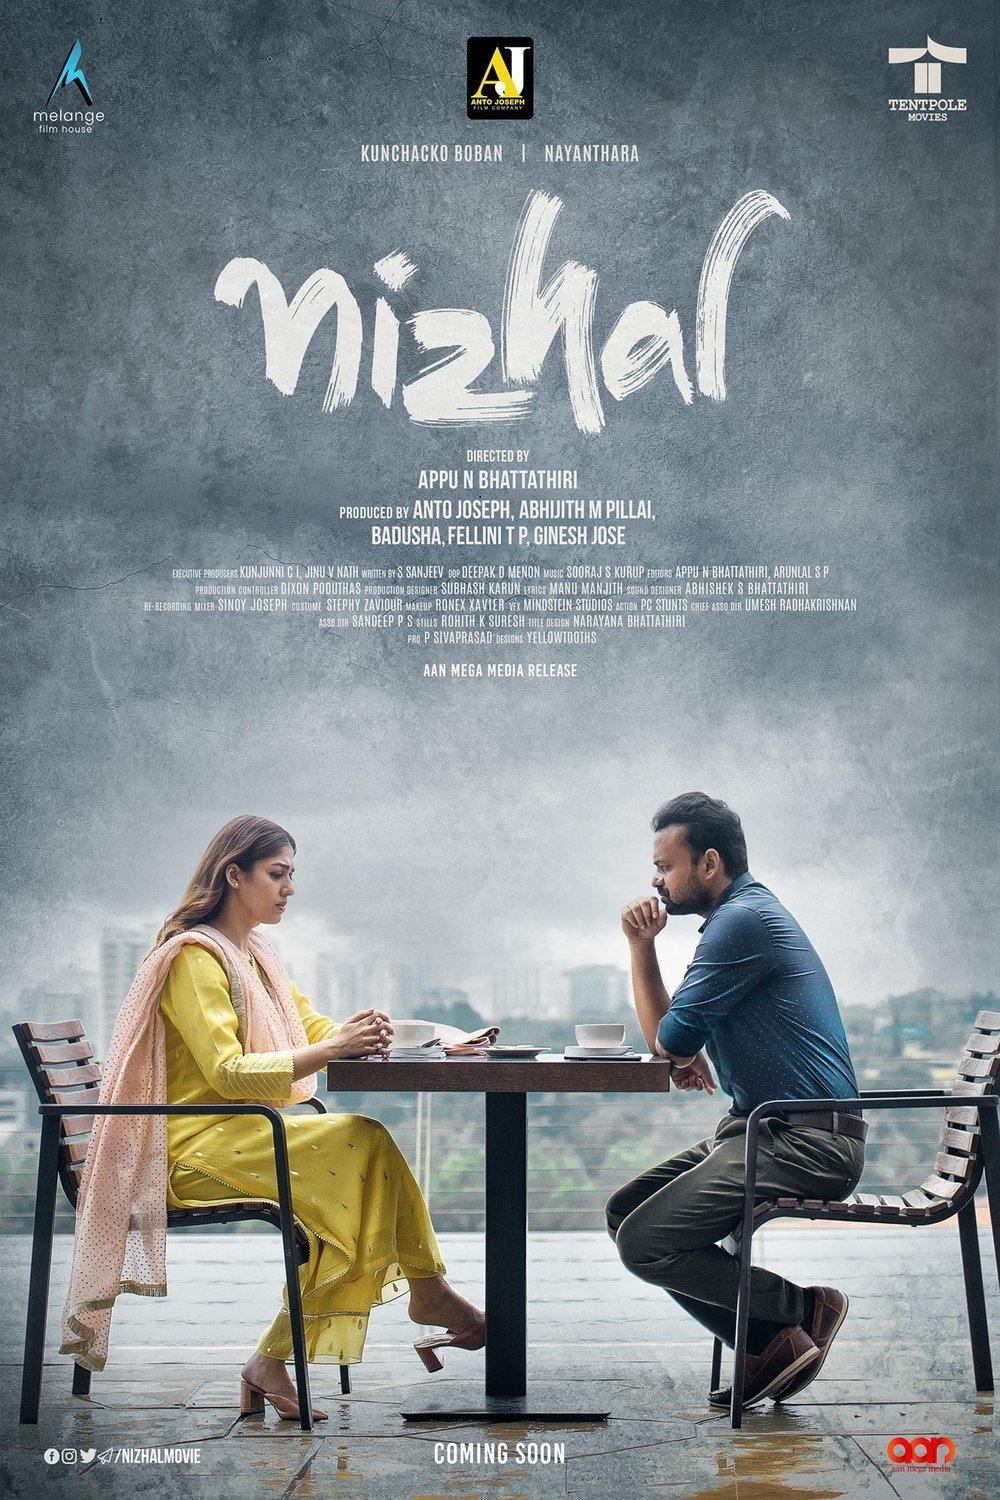 Malayalam poster of the movie Nizhal